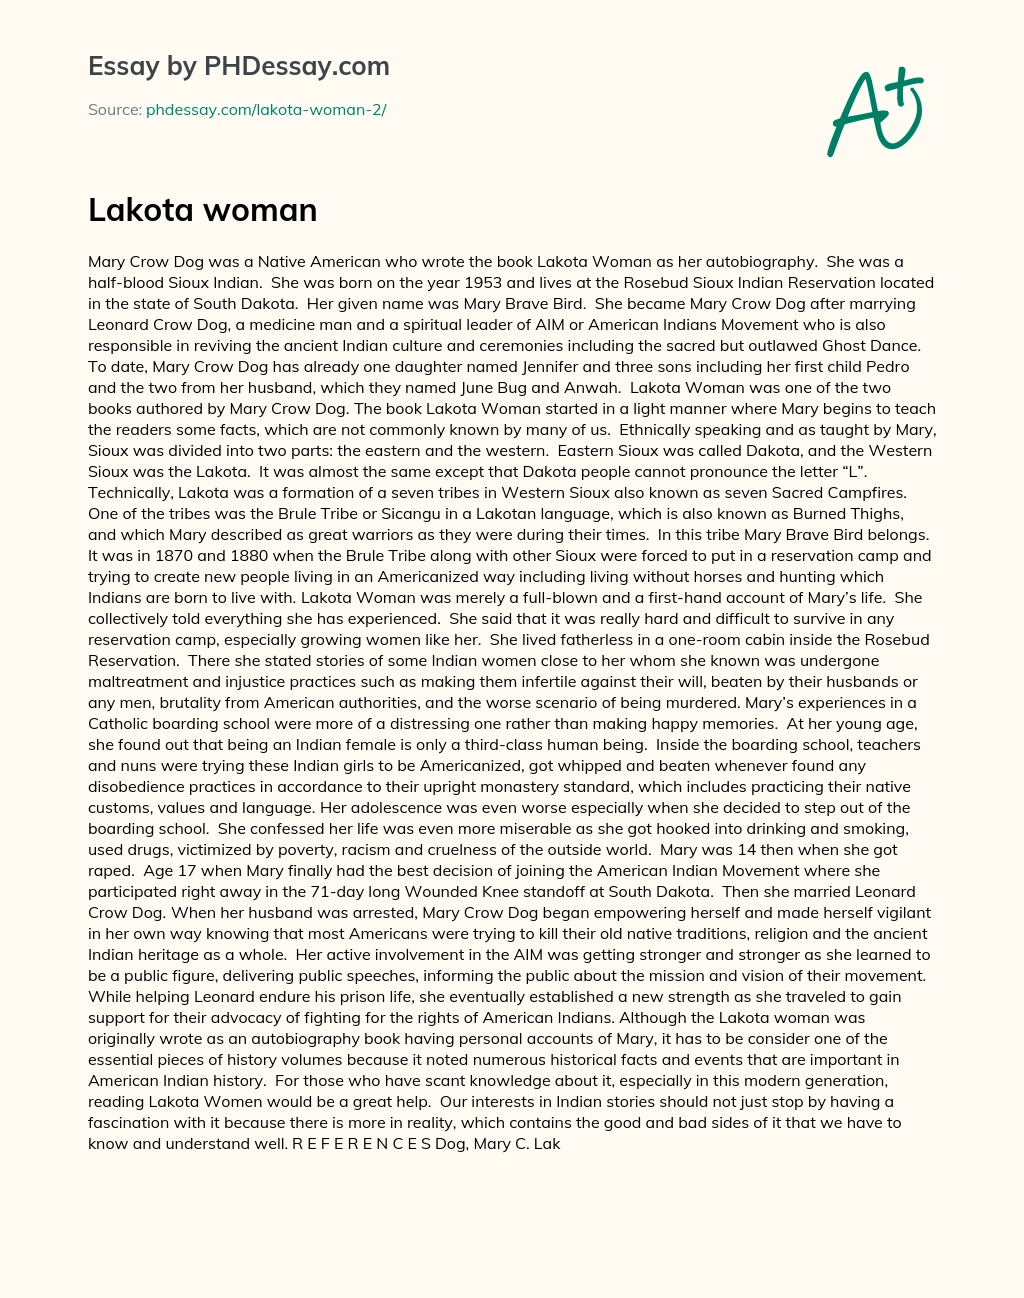 lakota woman book summary